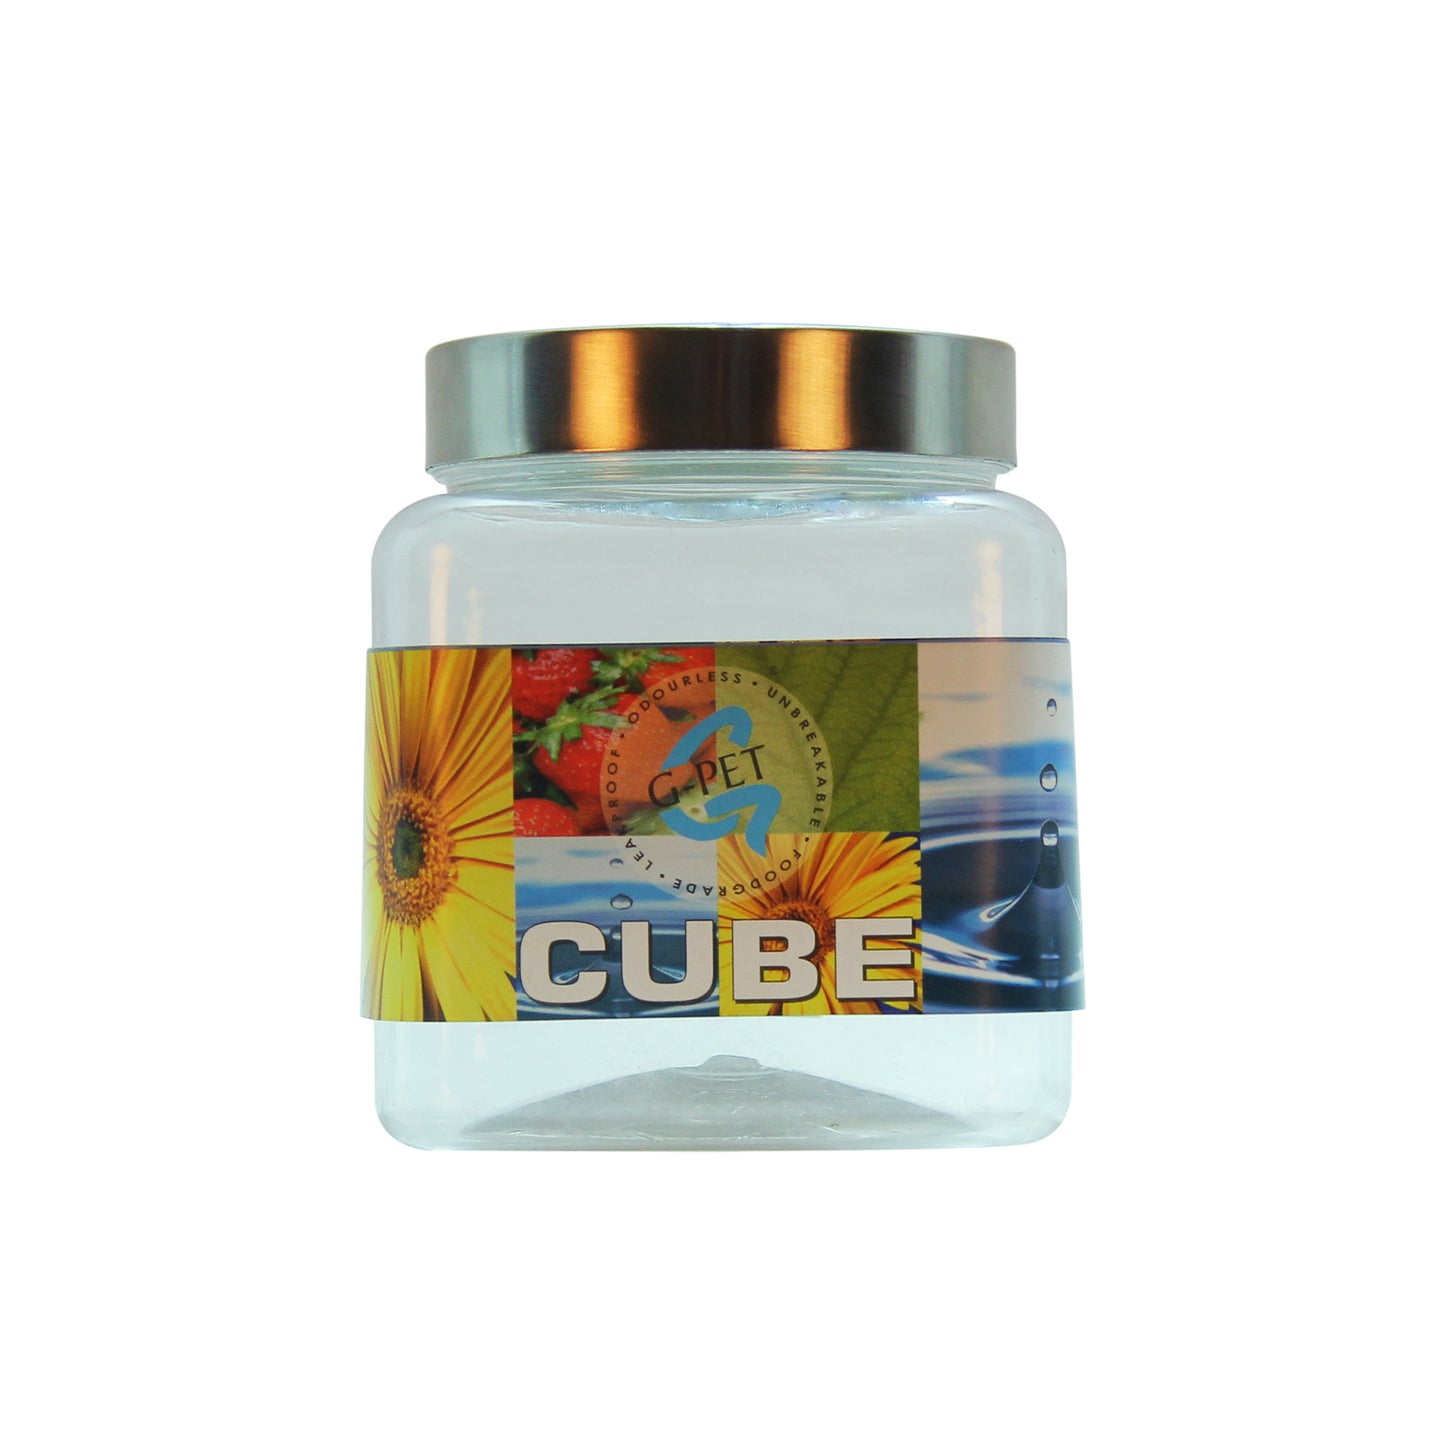 Cube PET Jar / Container PET Plastic Airtight Container with Steel Cap (3, 750ML)